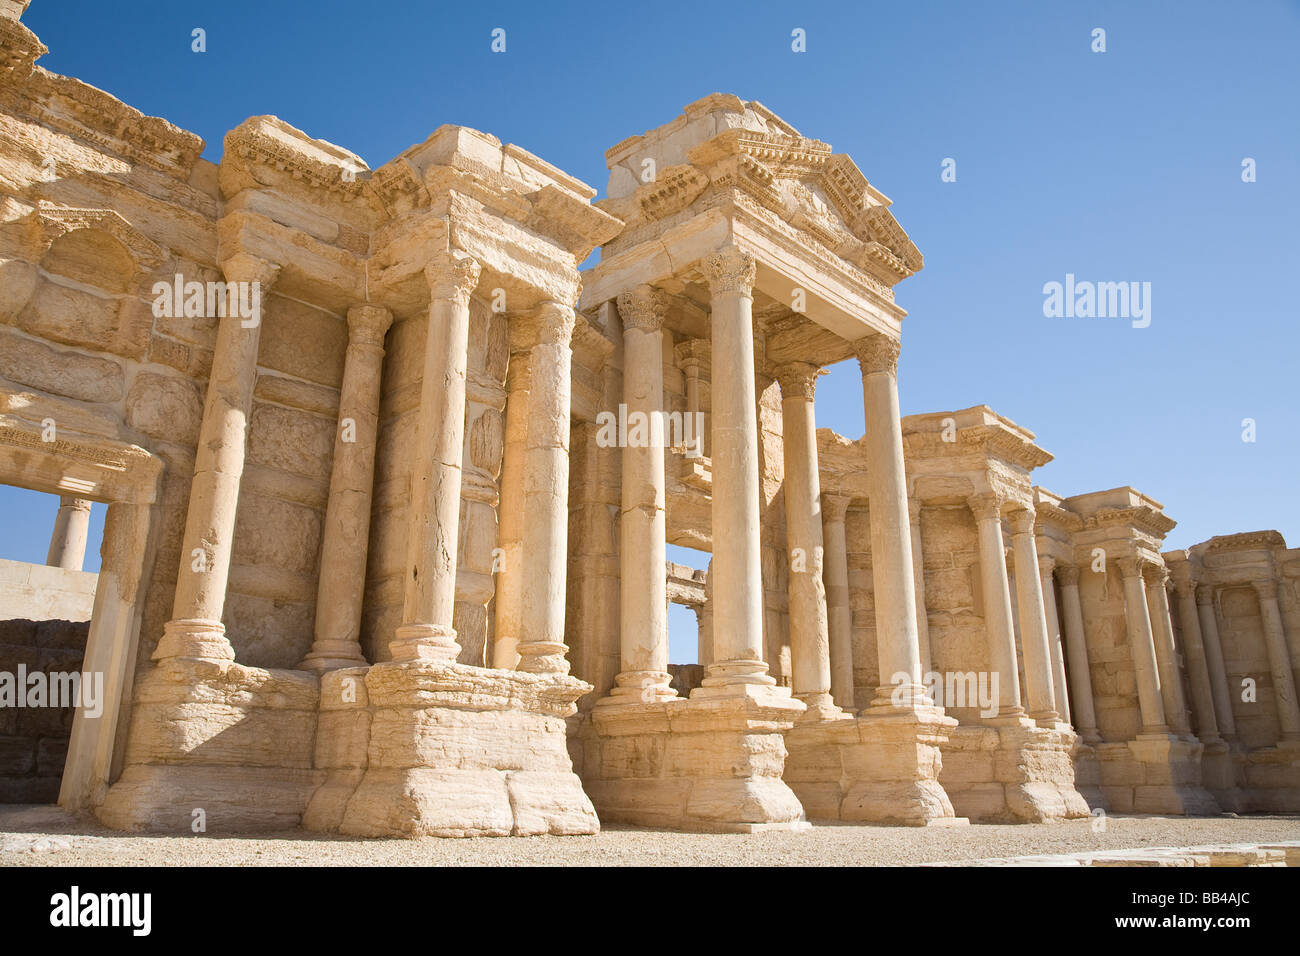 Roman ruins in the desert oasis of Palmyra, Syria. Stock Photo